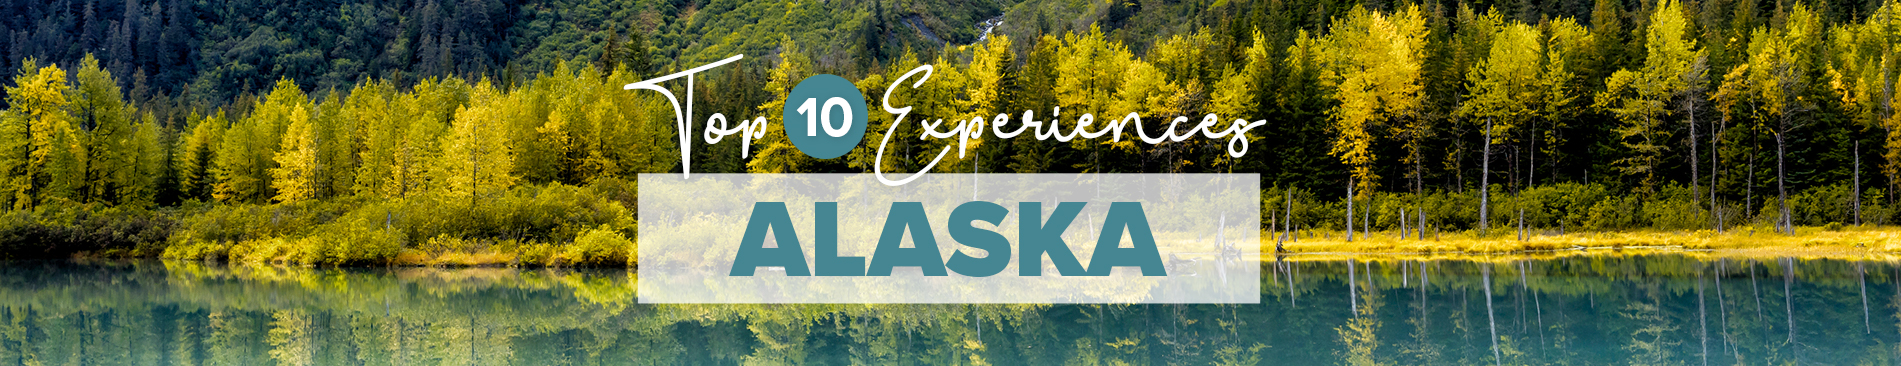 Alaska's Top 10 Experiences